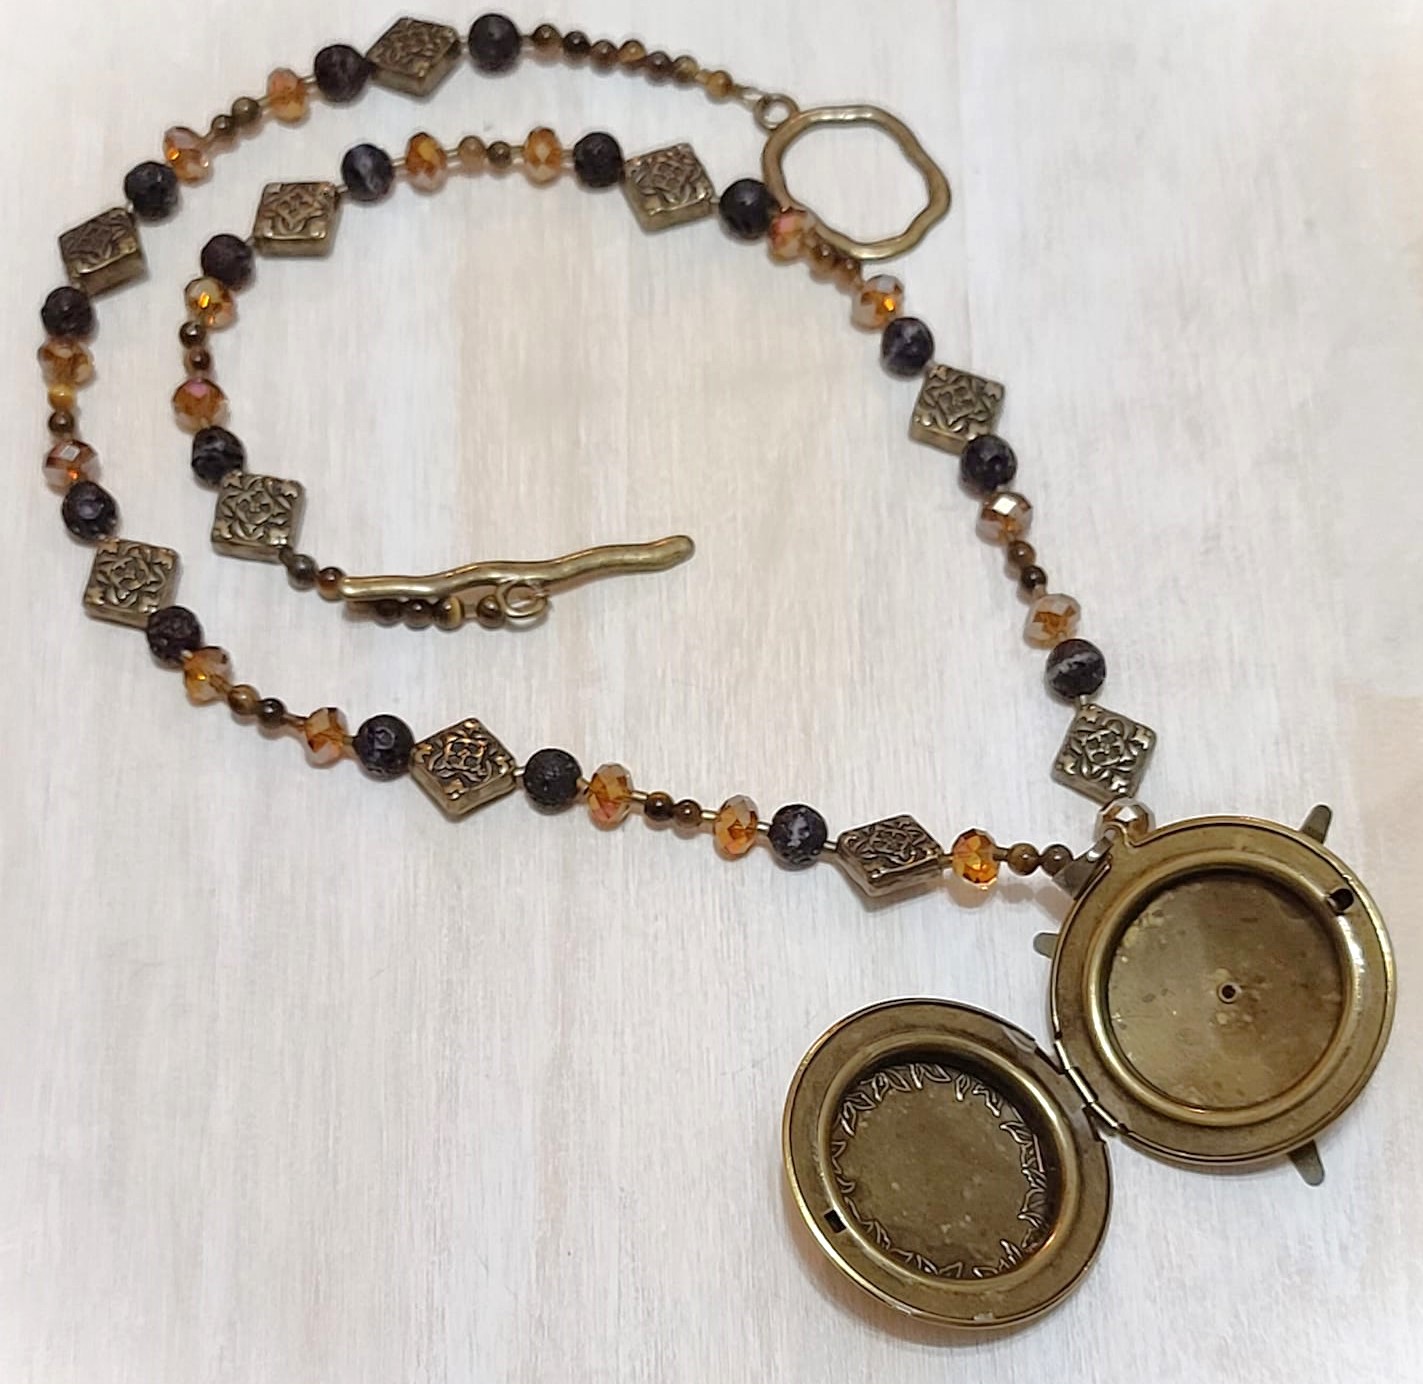 Gemstone locket necklace, lava rock, crystals and tiger eye